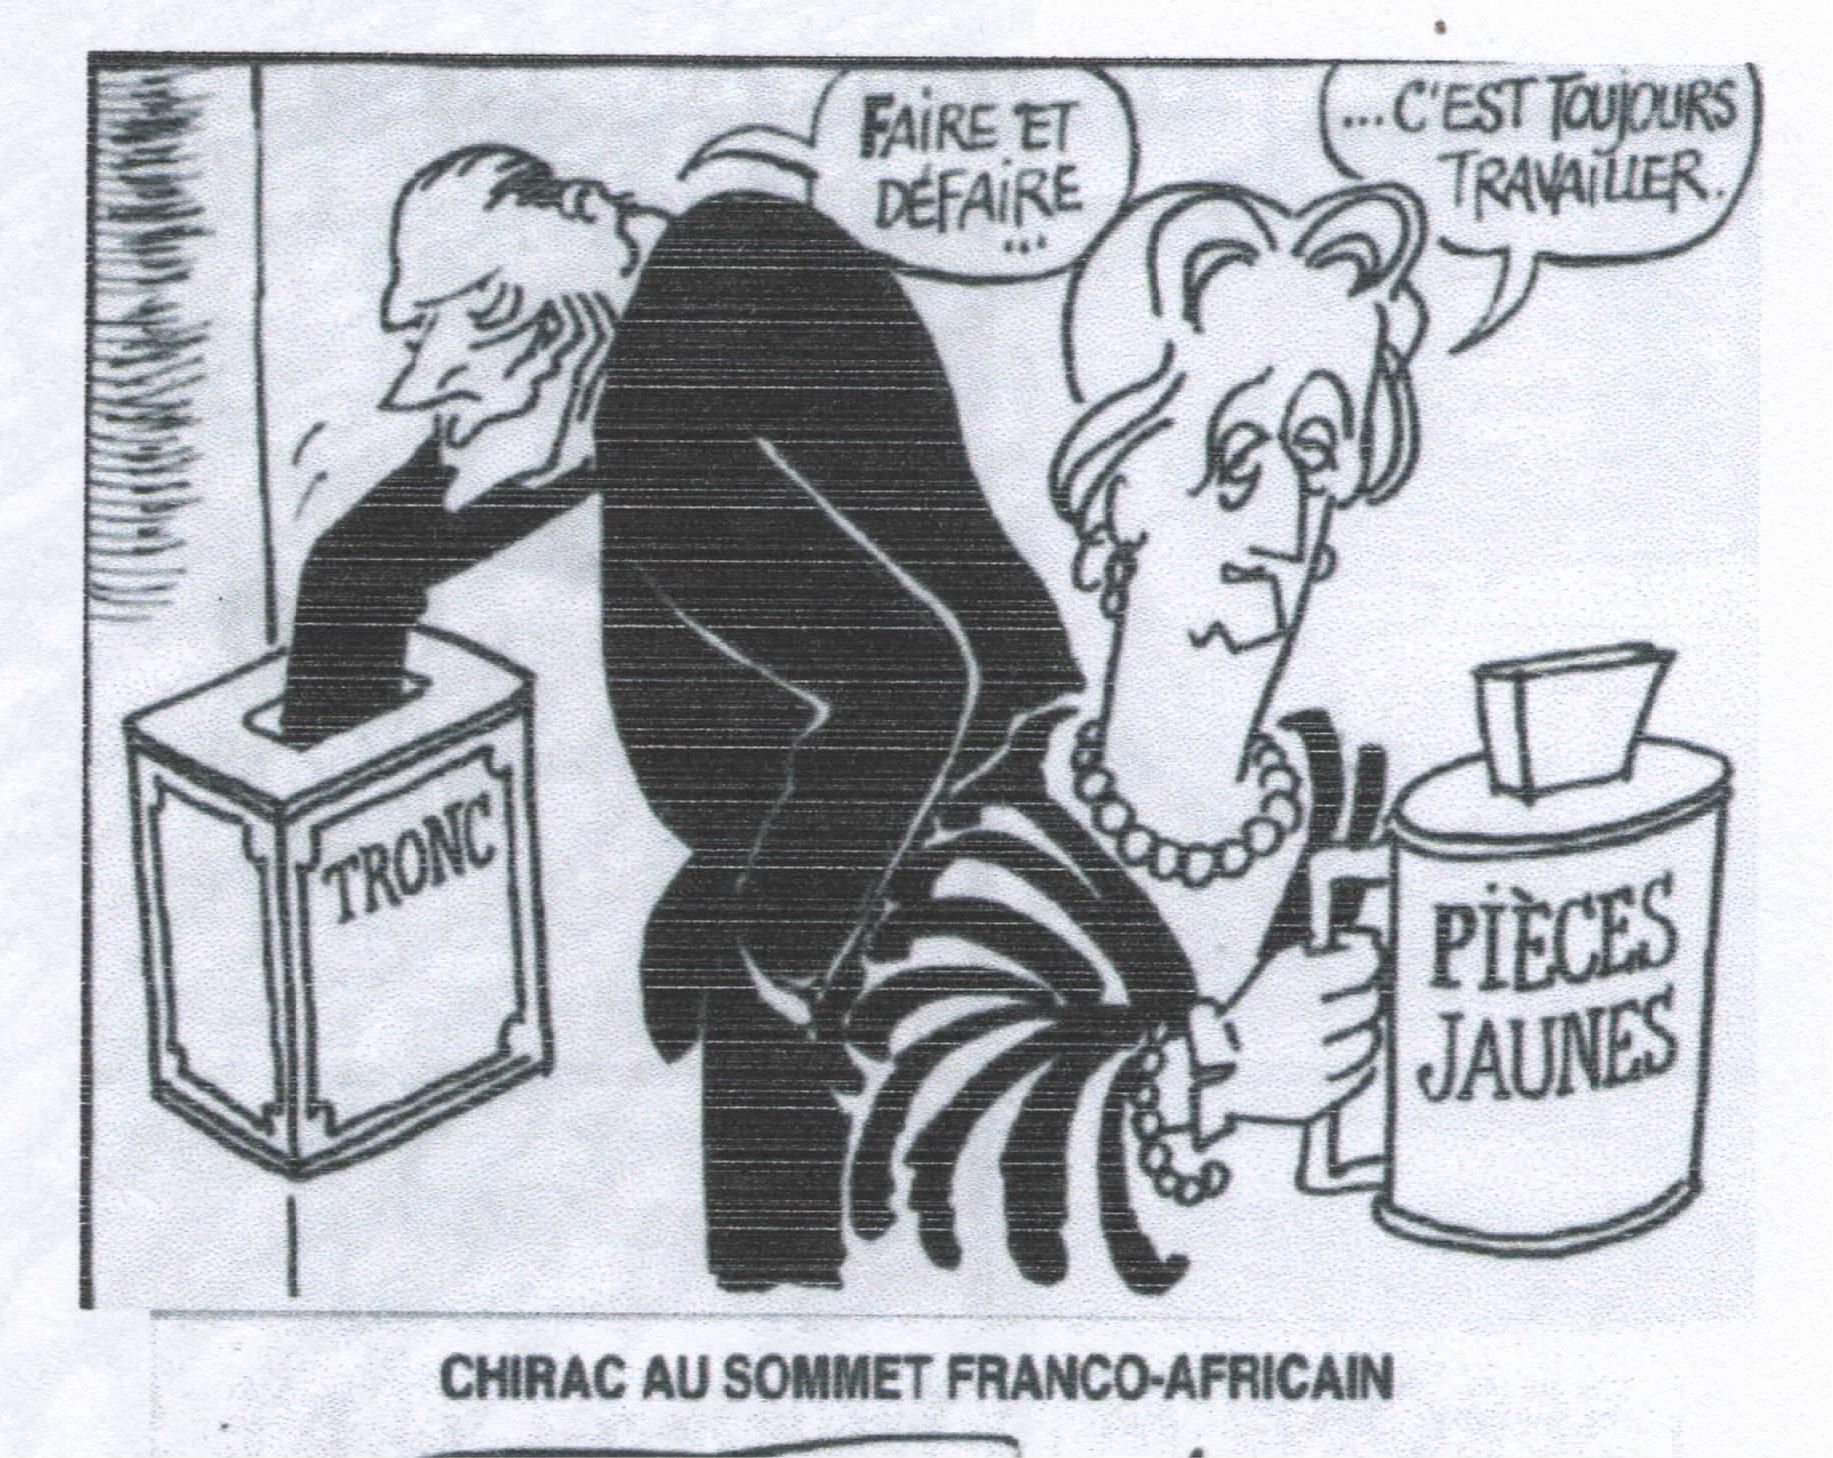 Chirac au sommet franco-africain